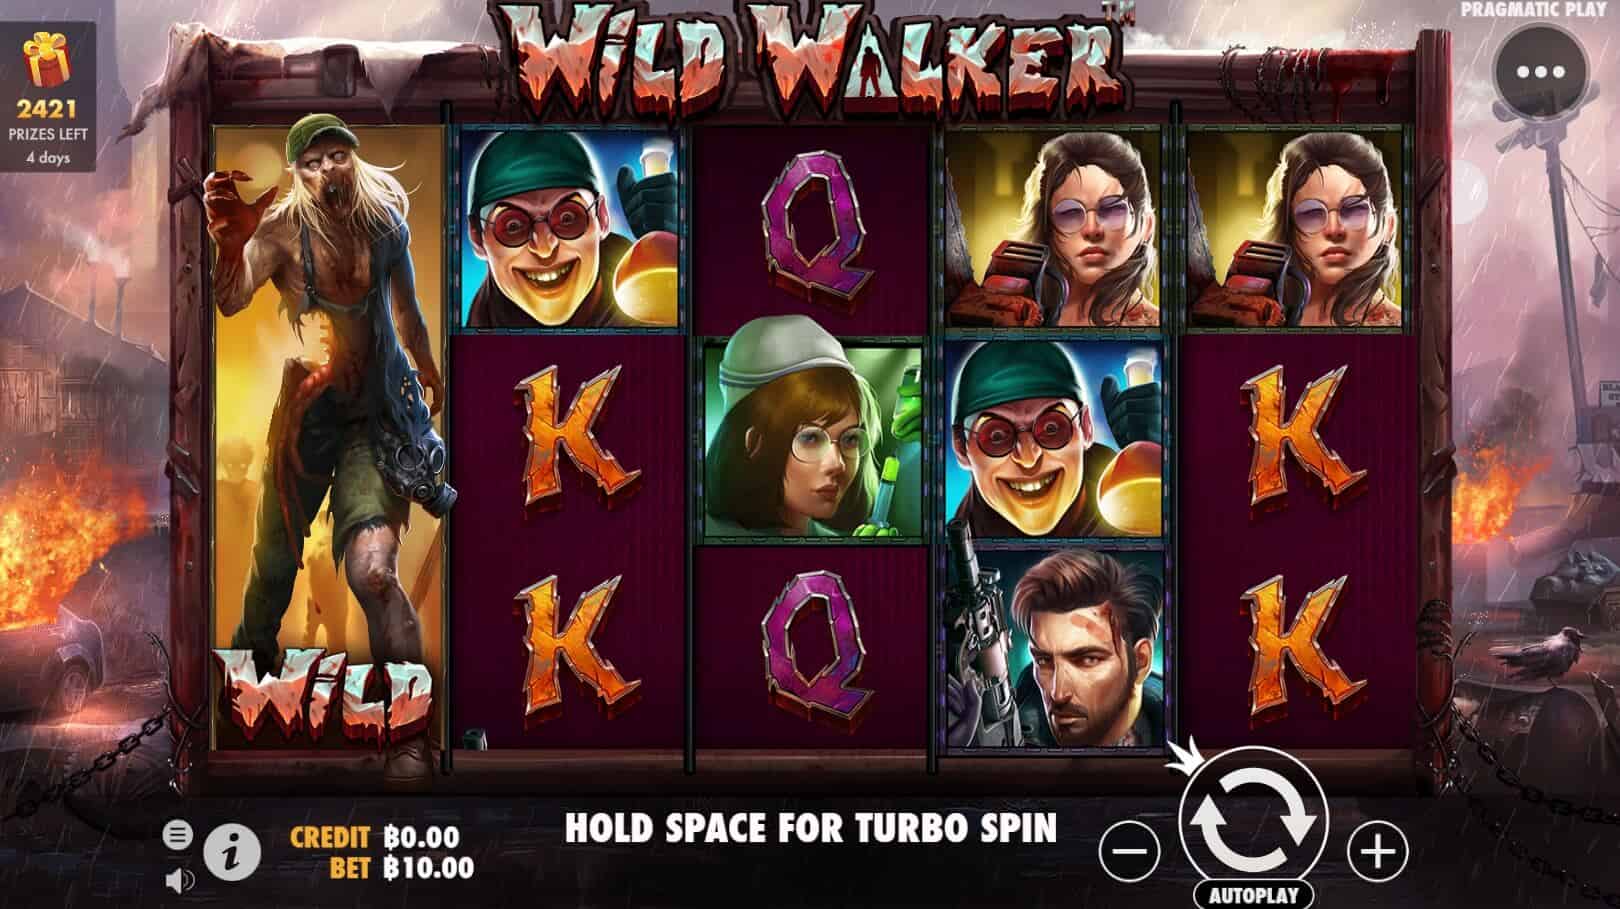 Wild Walker เกมสล็อต เว็บตรง จากค่าย Pragmatic Play สล็อต joker